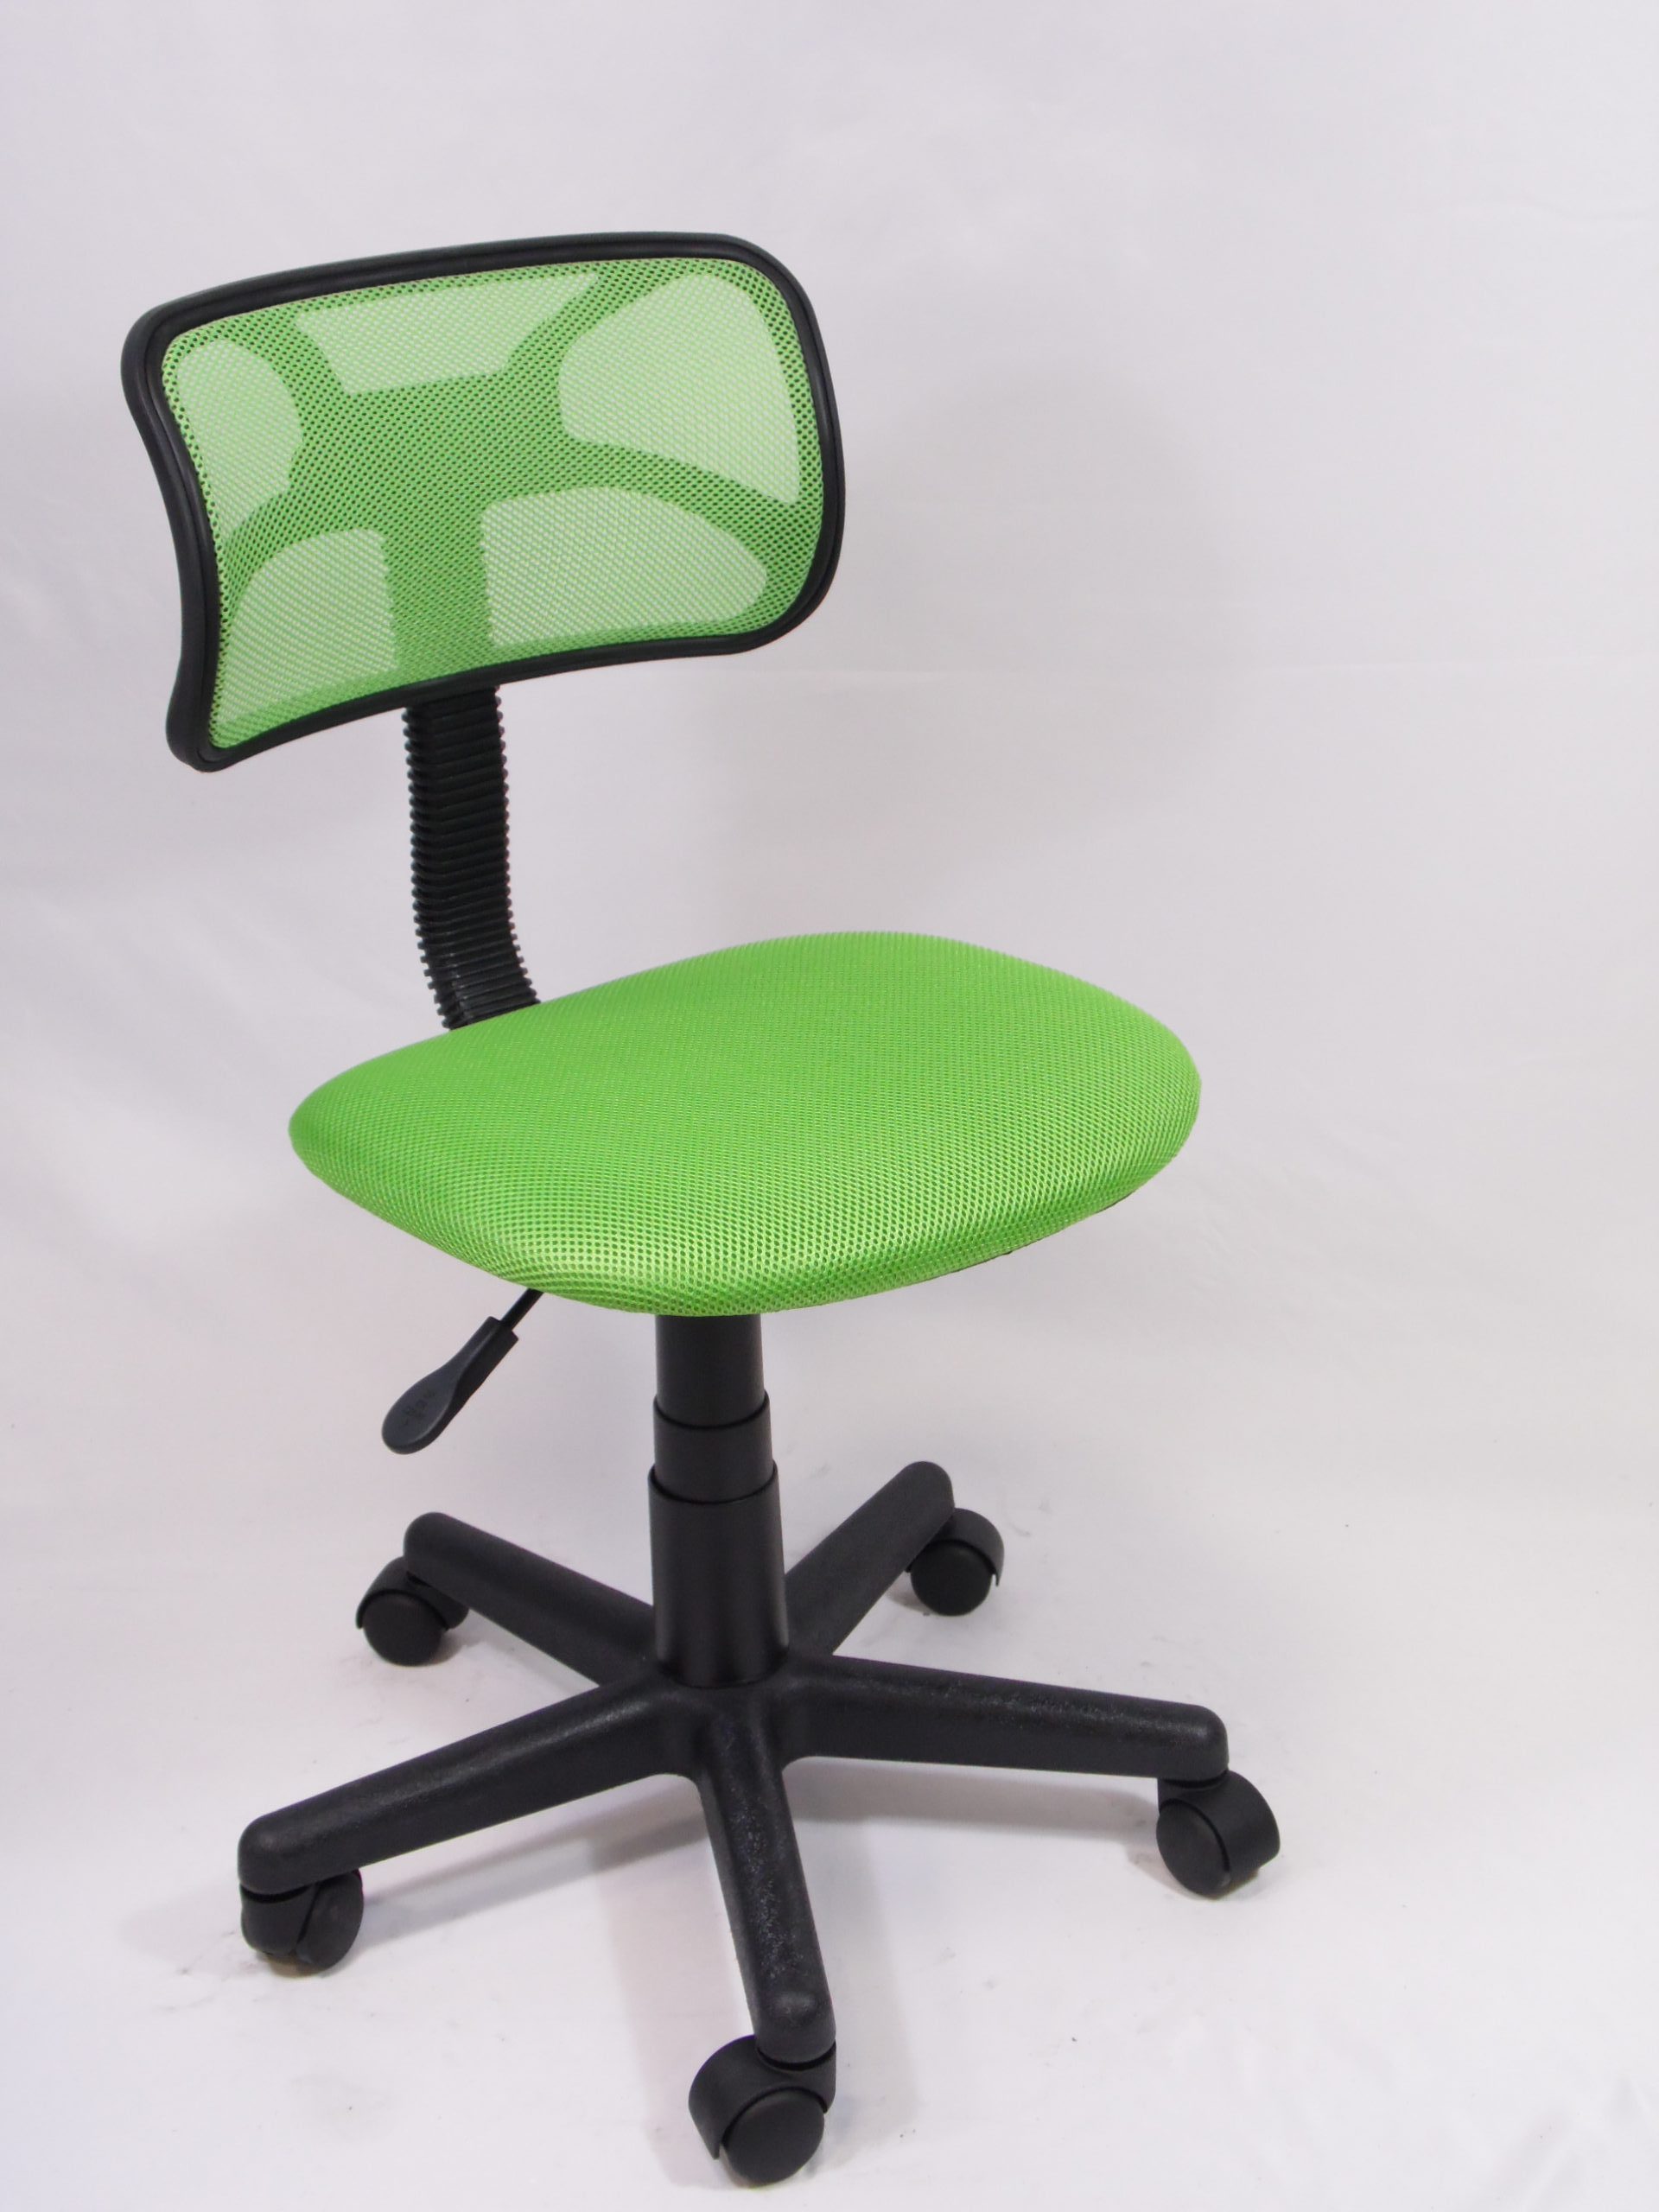 sedie per pc dimensioni: h max 83cm x d 55cm, h sedile 45cm x d sedile 44cm; Materiale: plastica e tessuto color verde